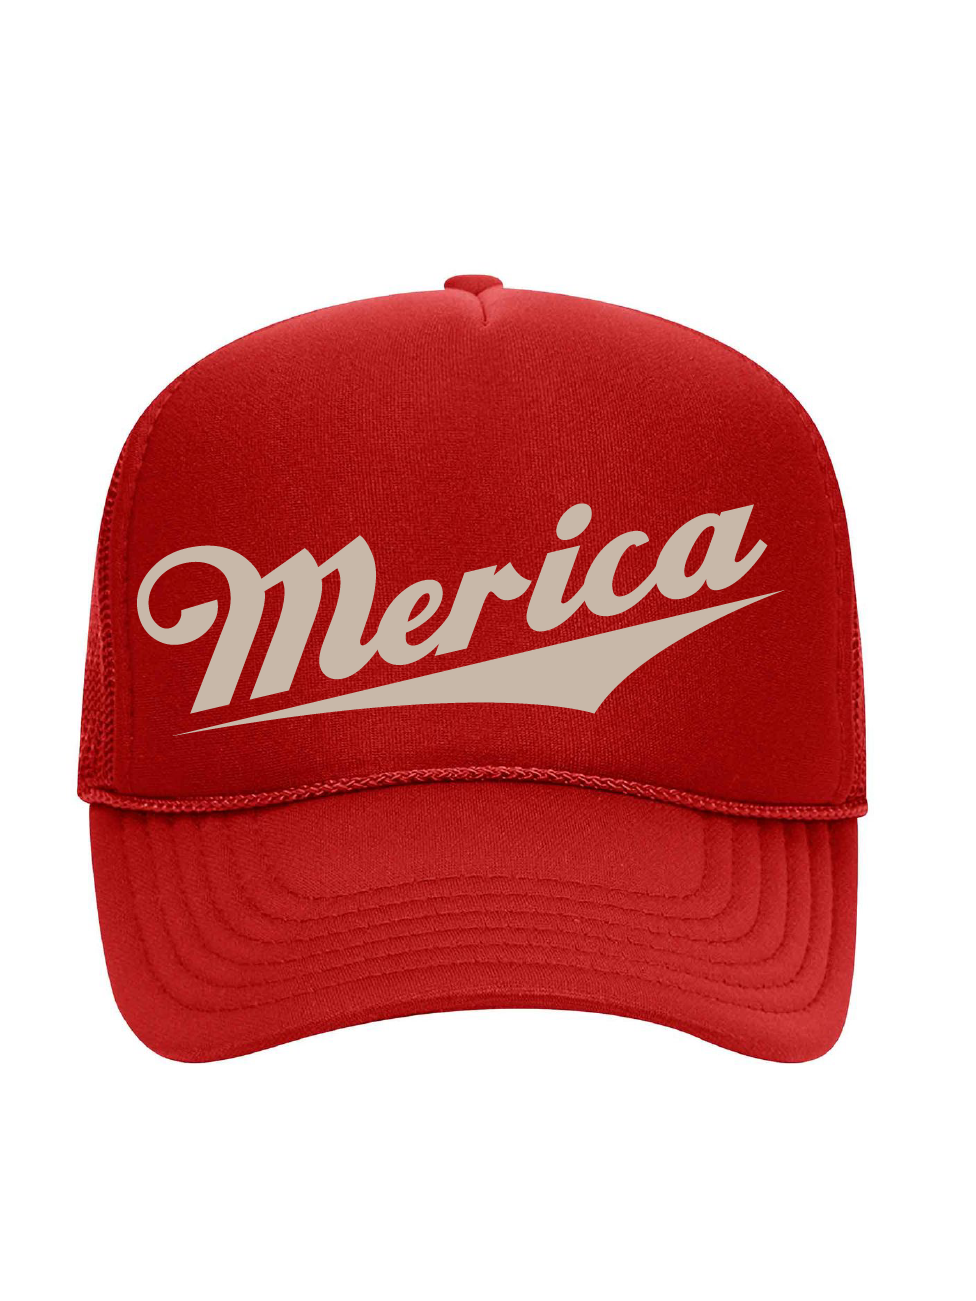 'Merica Foam Trucker Hat / 5 colors / Patriotic